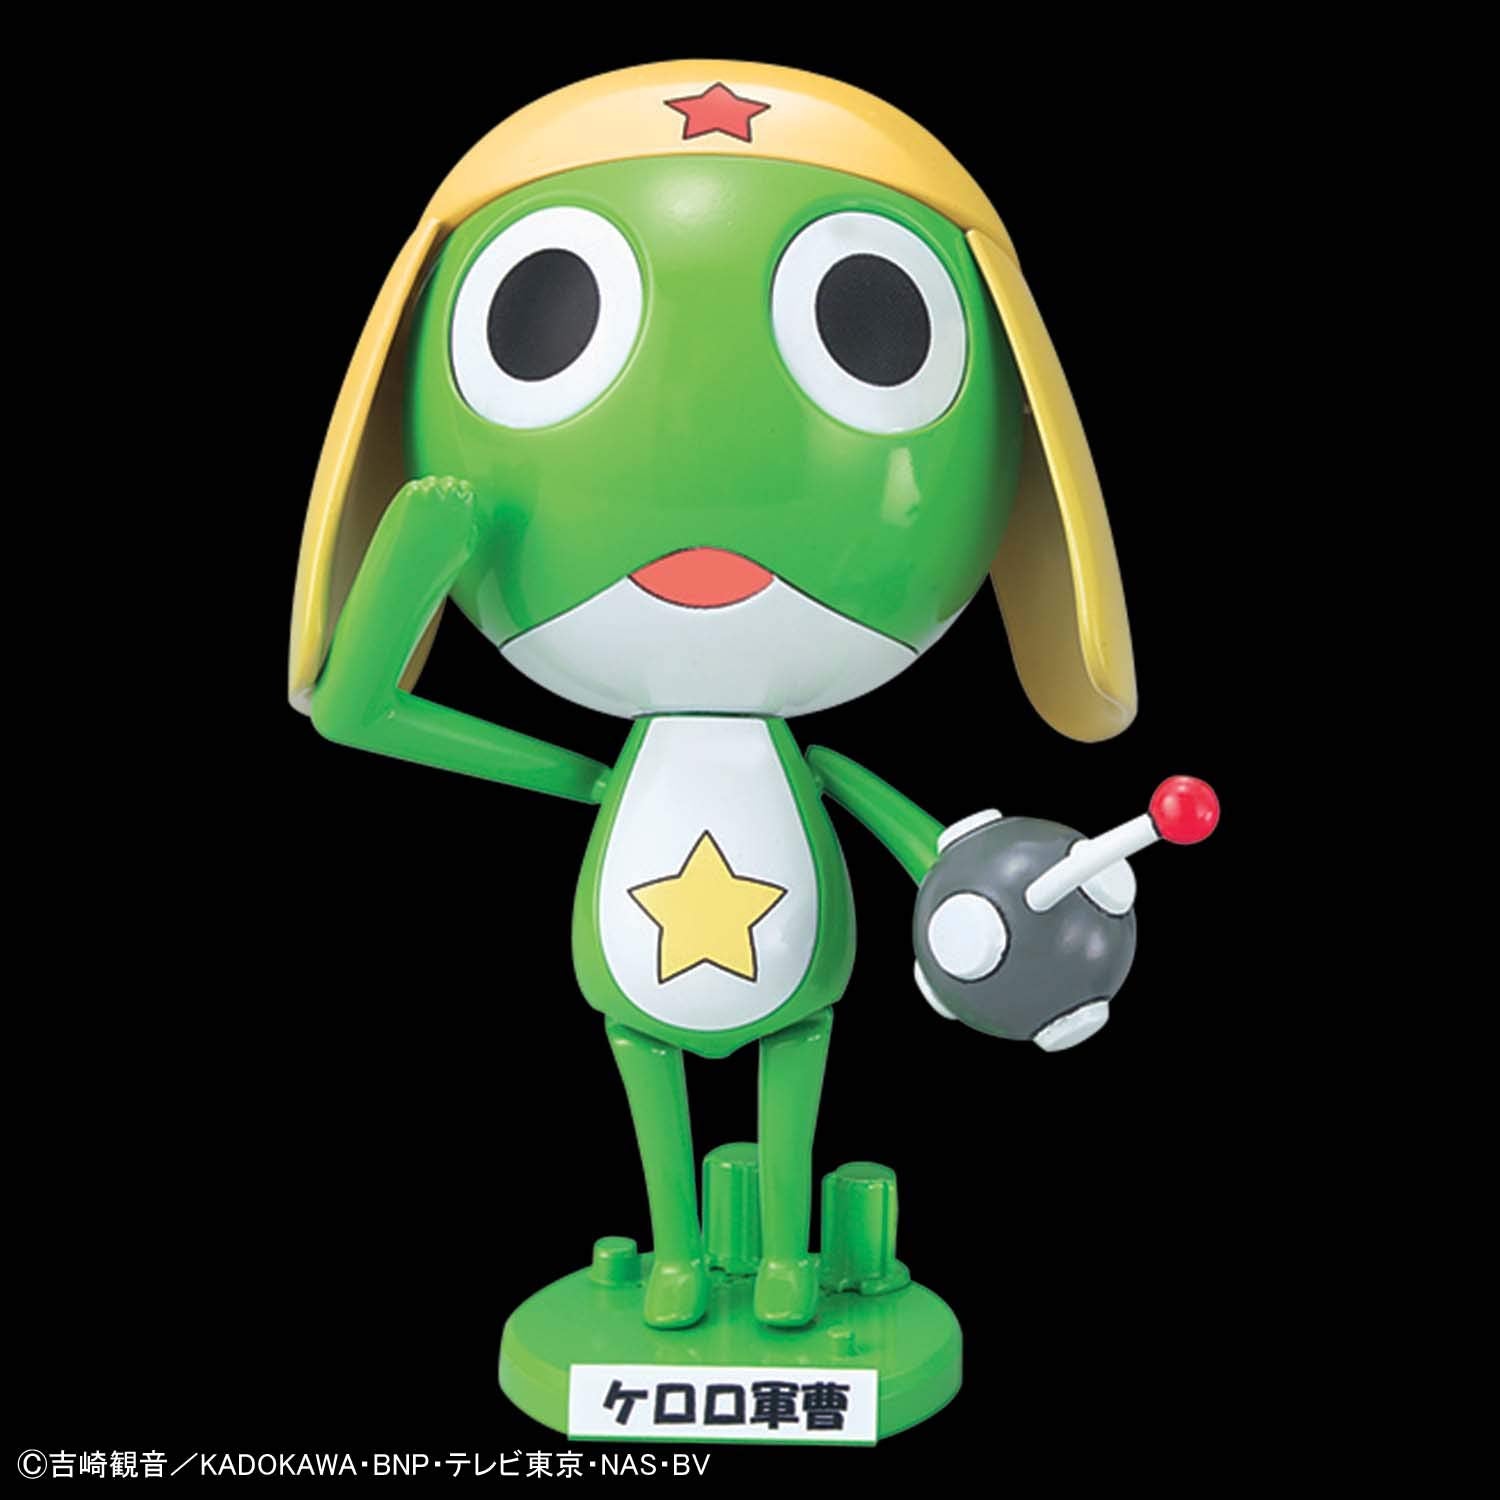 Bandai Spirits Keroro Gunso Anniversary Package Edition Sgt. Frog Plastic Model Kit